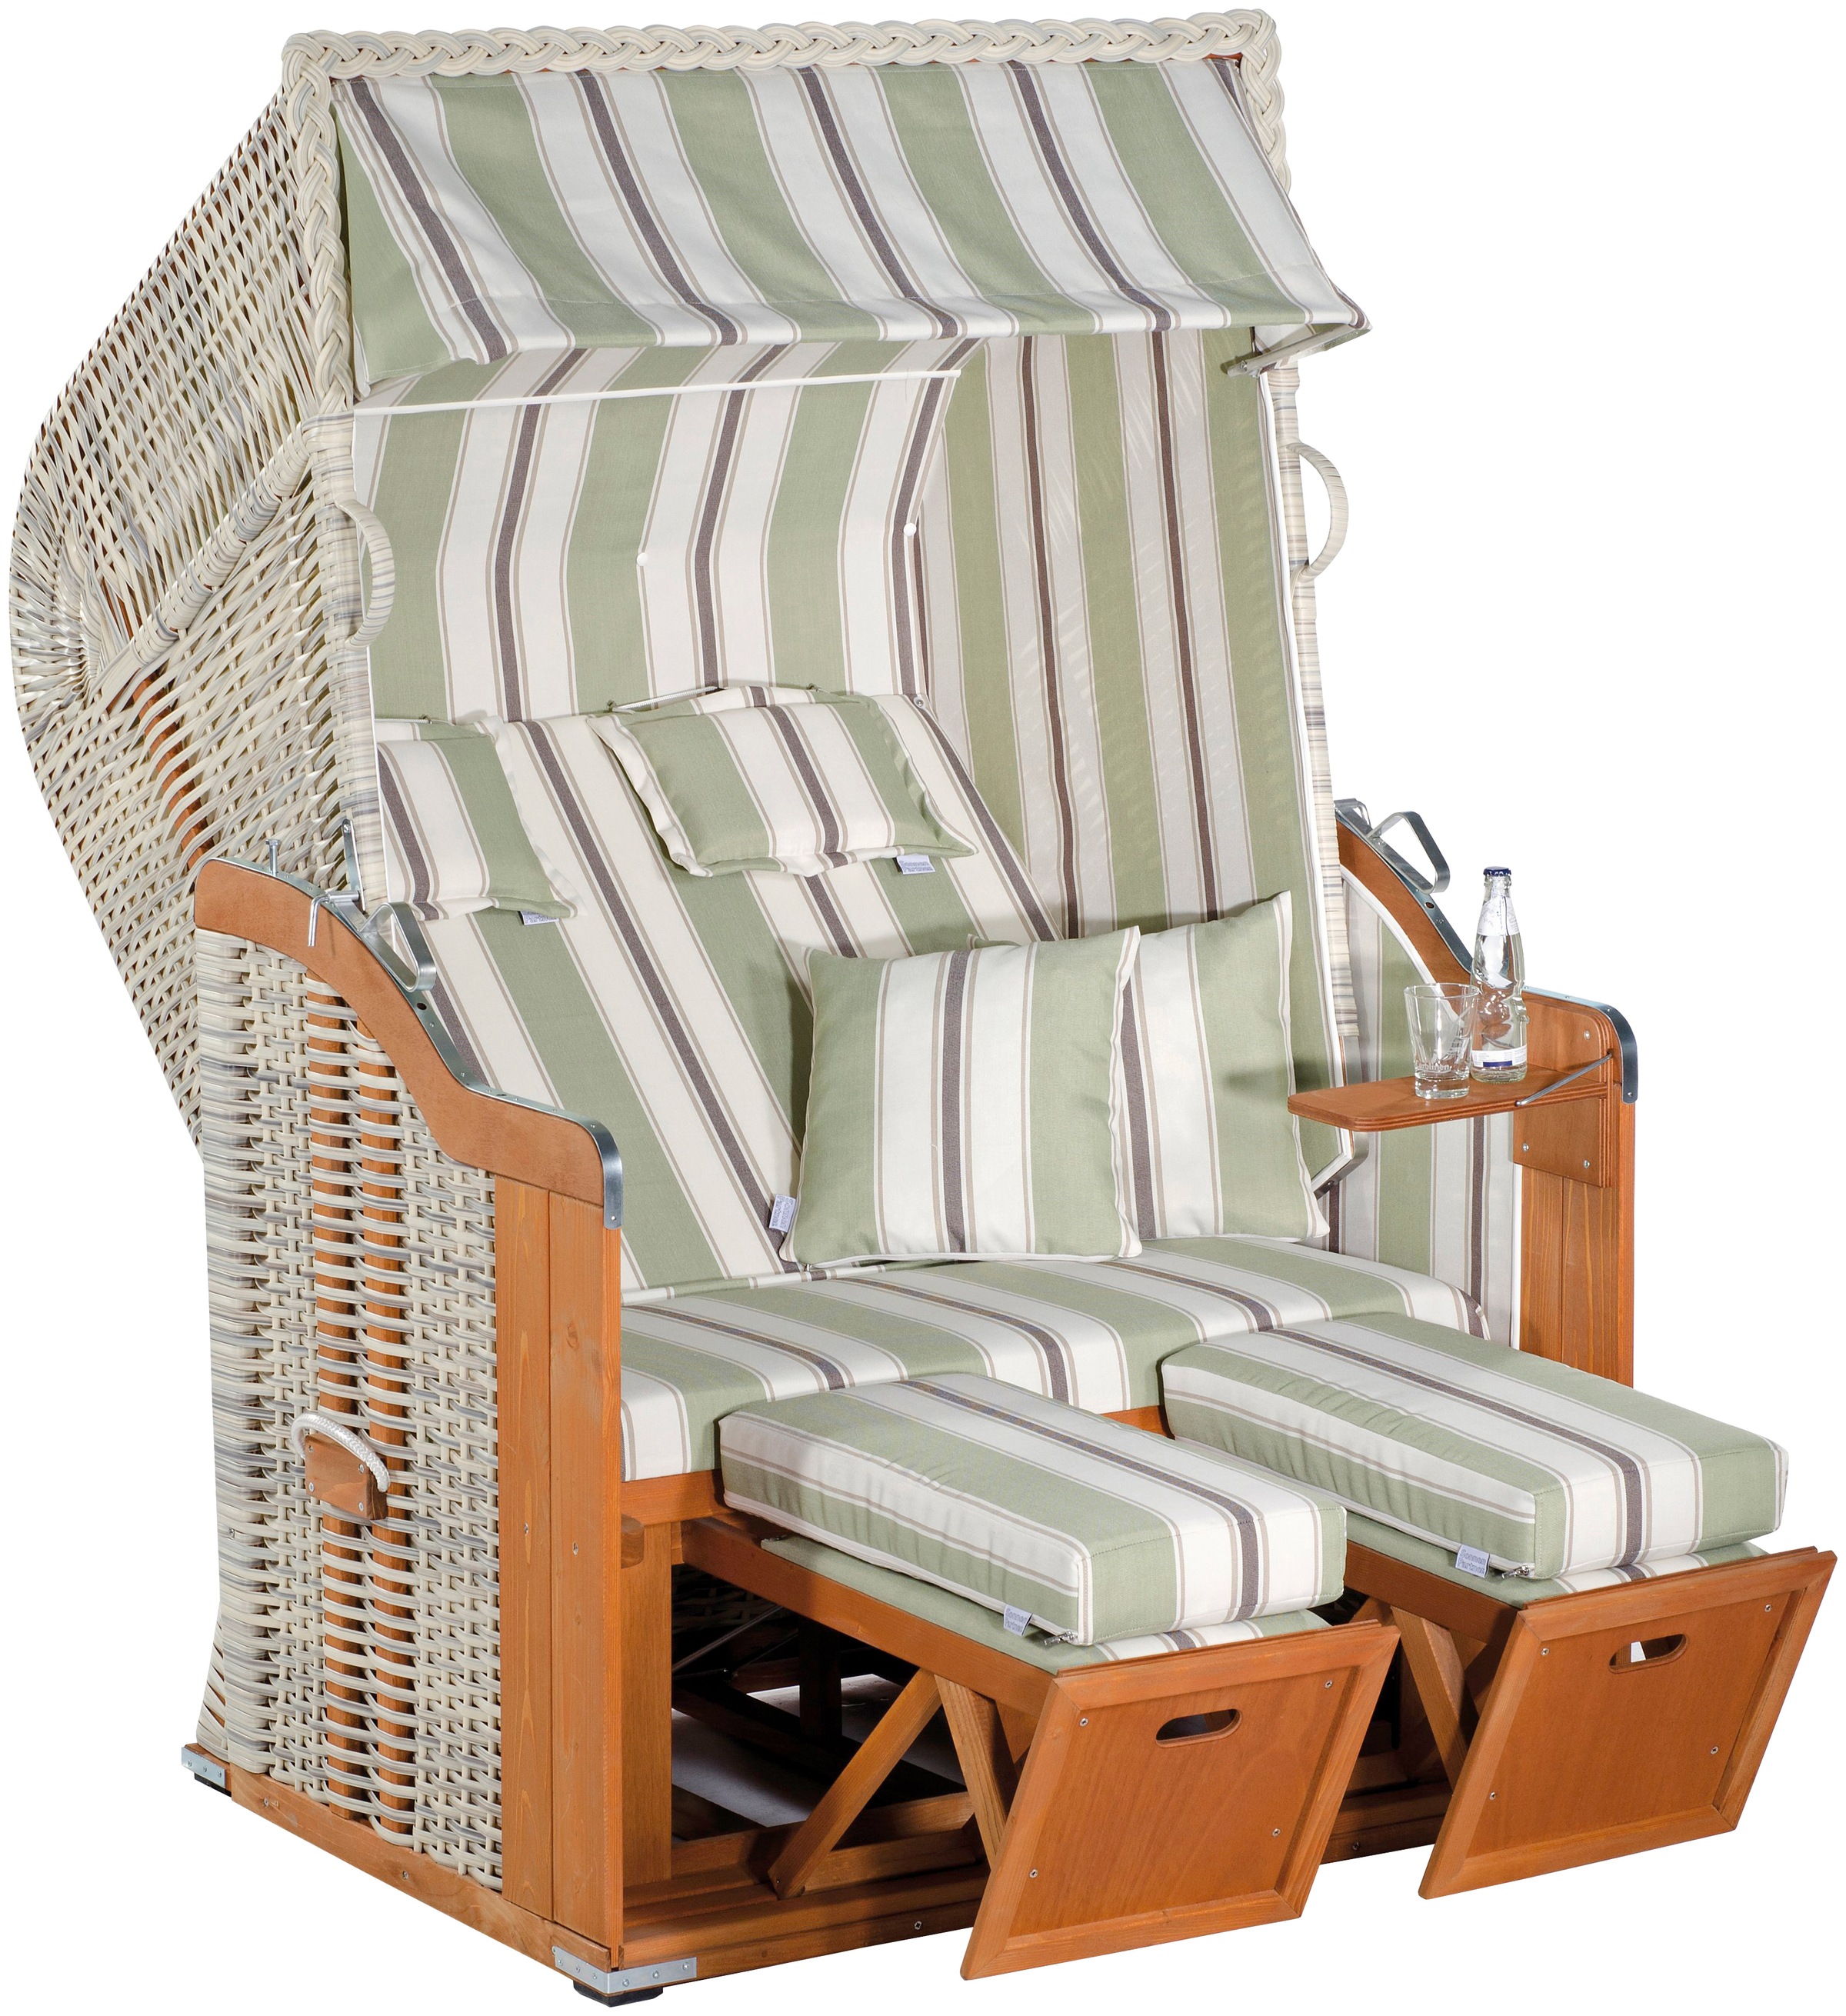 SunnySmart Paplūdimio baldai »Rustikal 250 Plus«